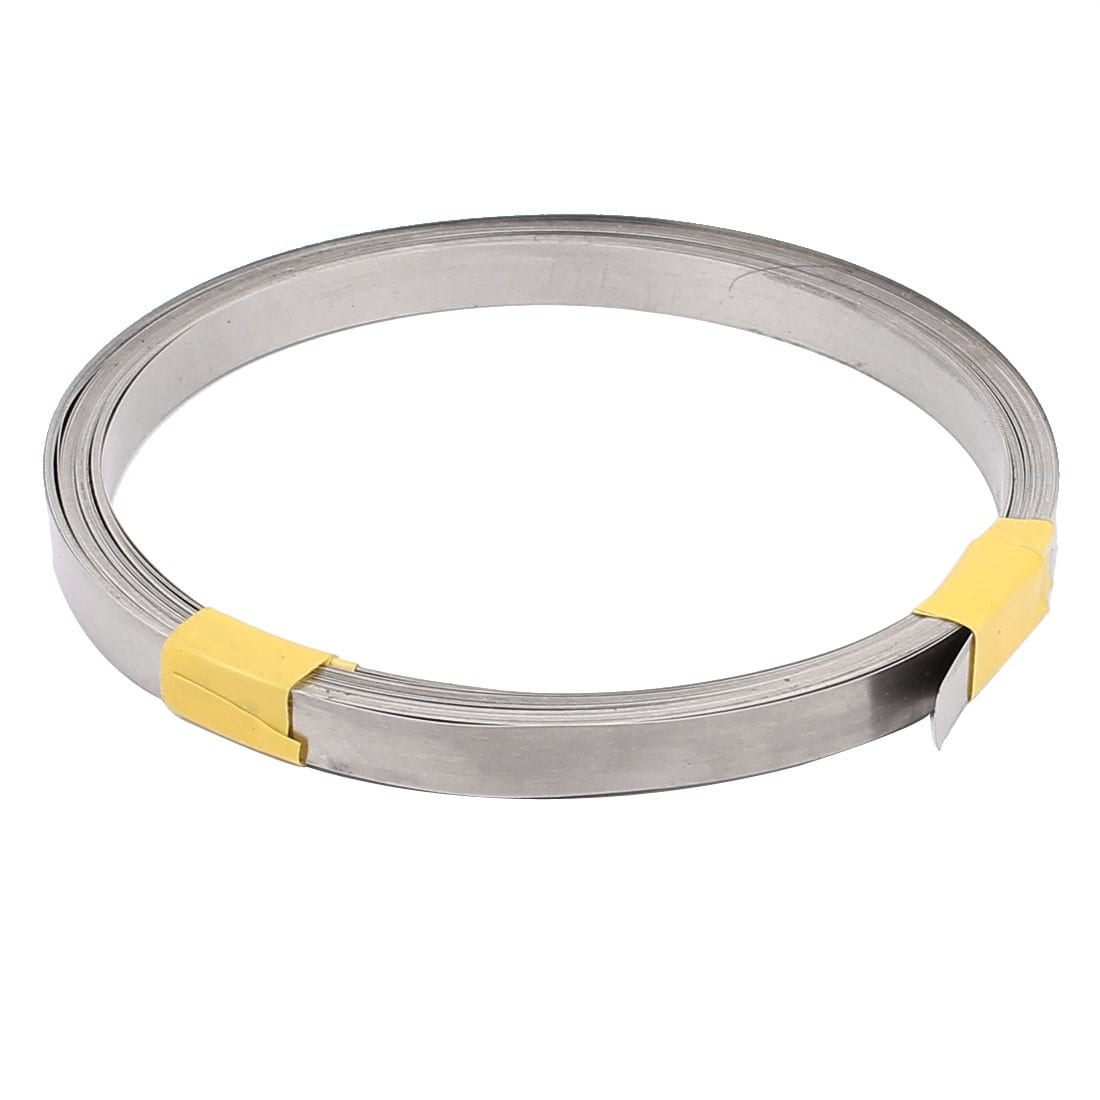 Nichrome Wire 10m/roll 0.8mm-1.2mm Heating wire Resistance wire